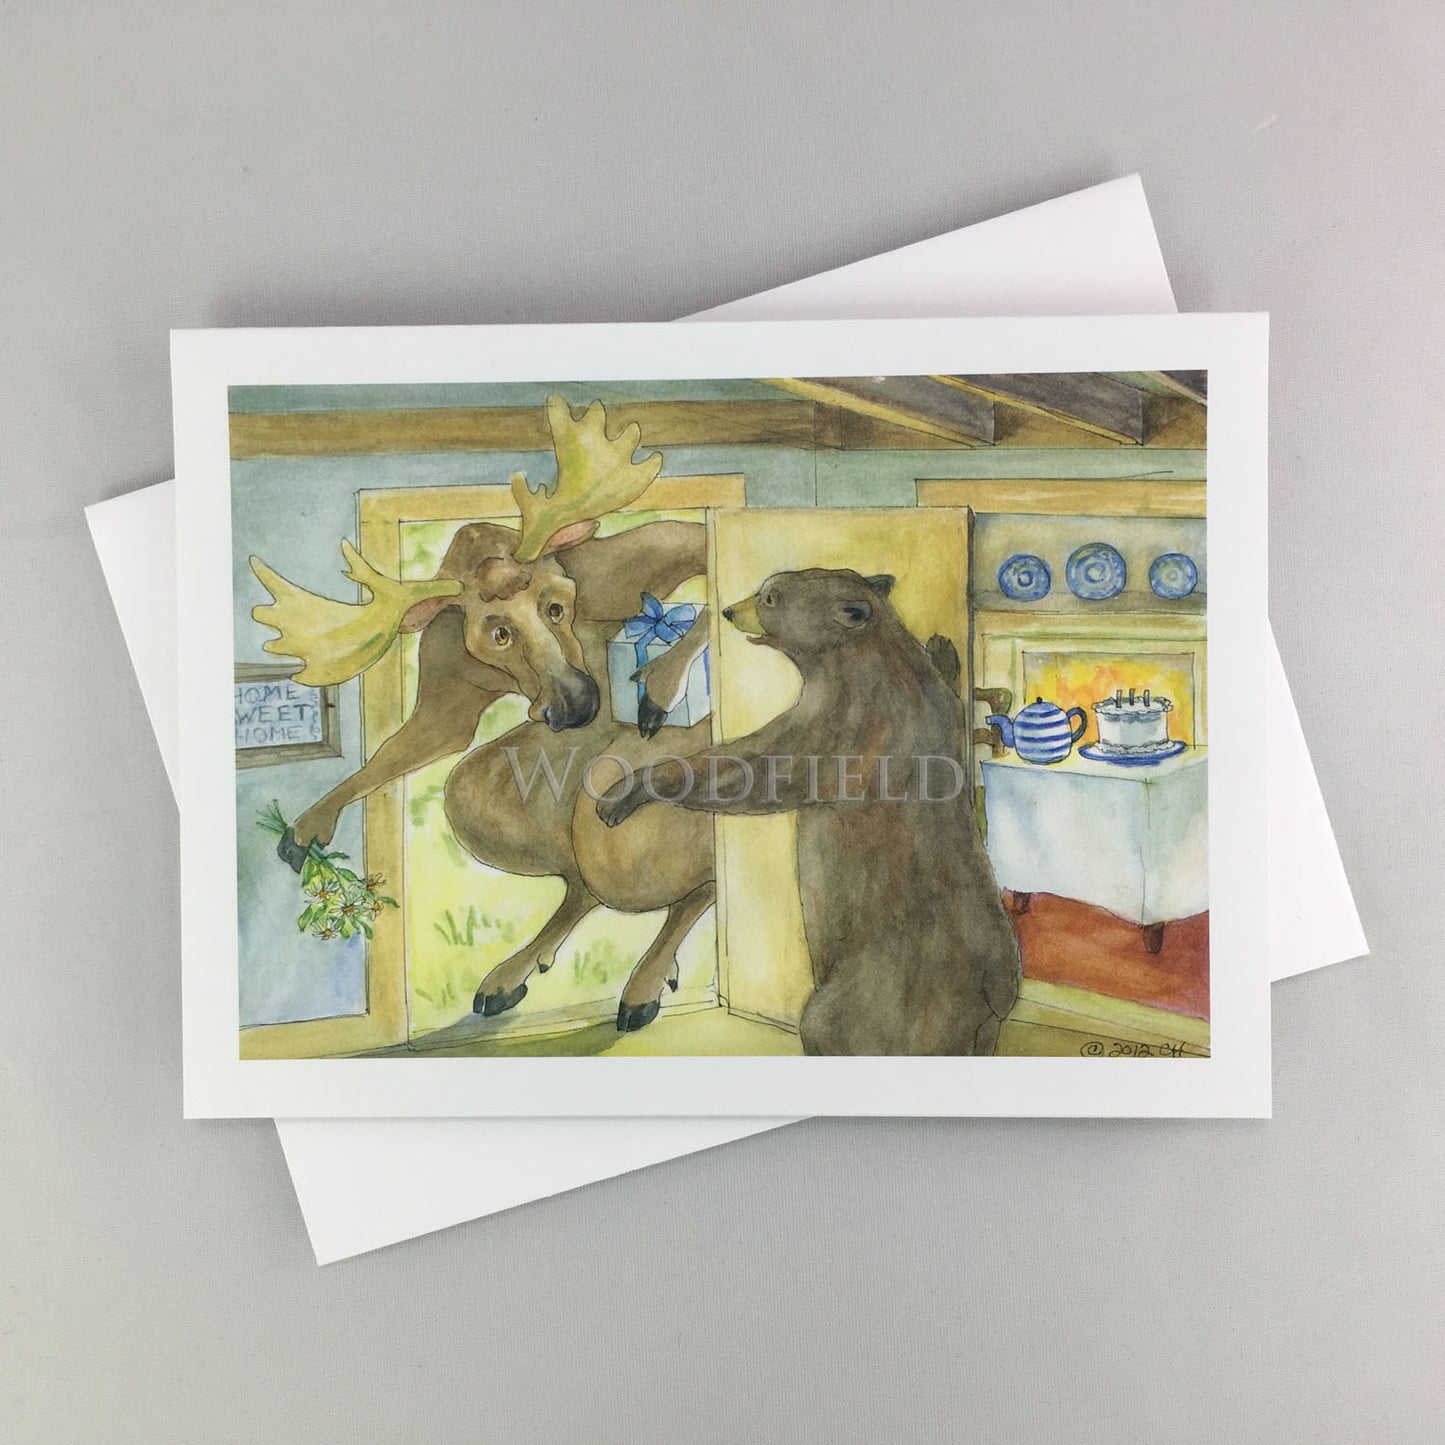 Bear's Birthday - Greeting Card by Woodfield Press